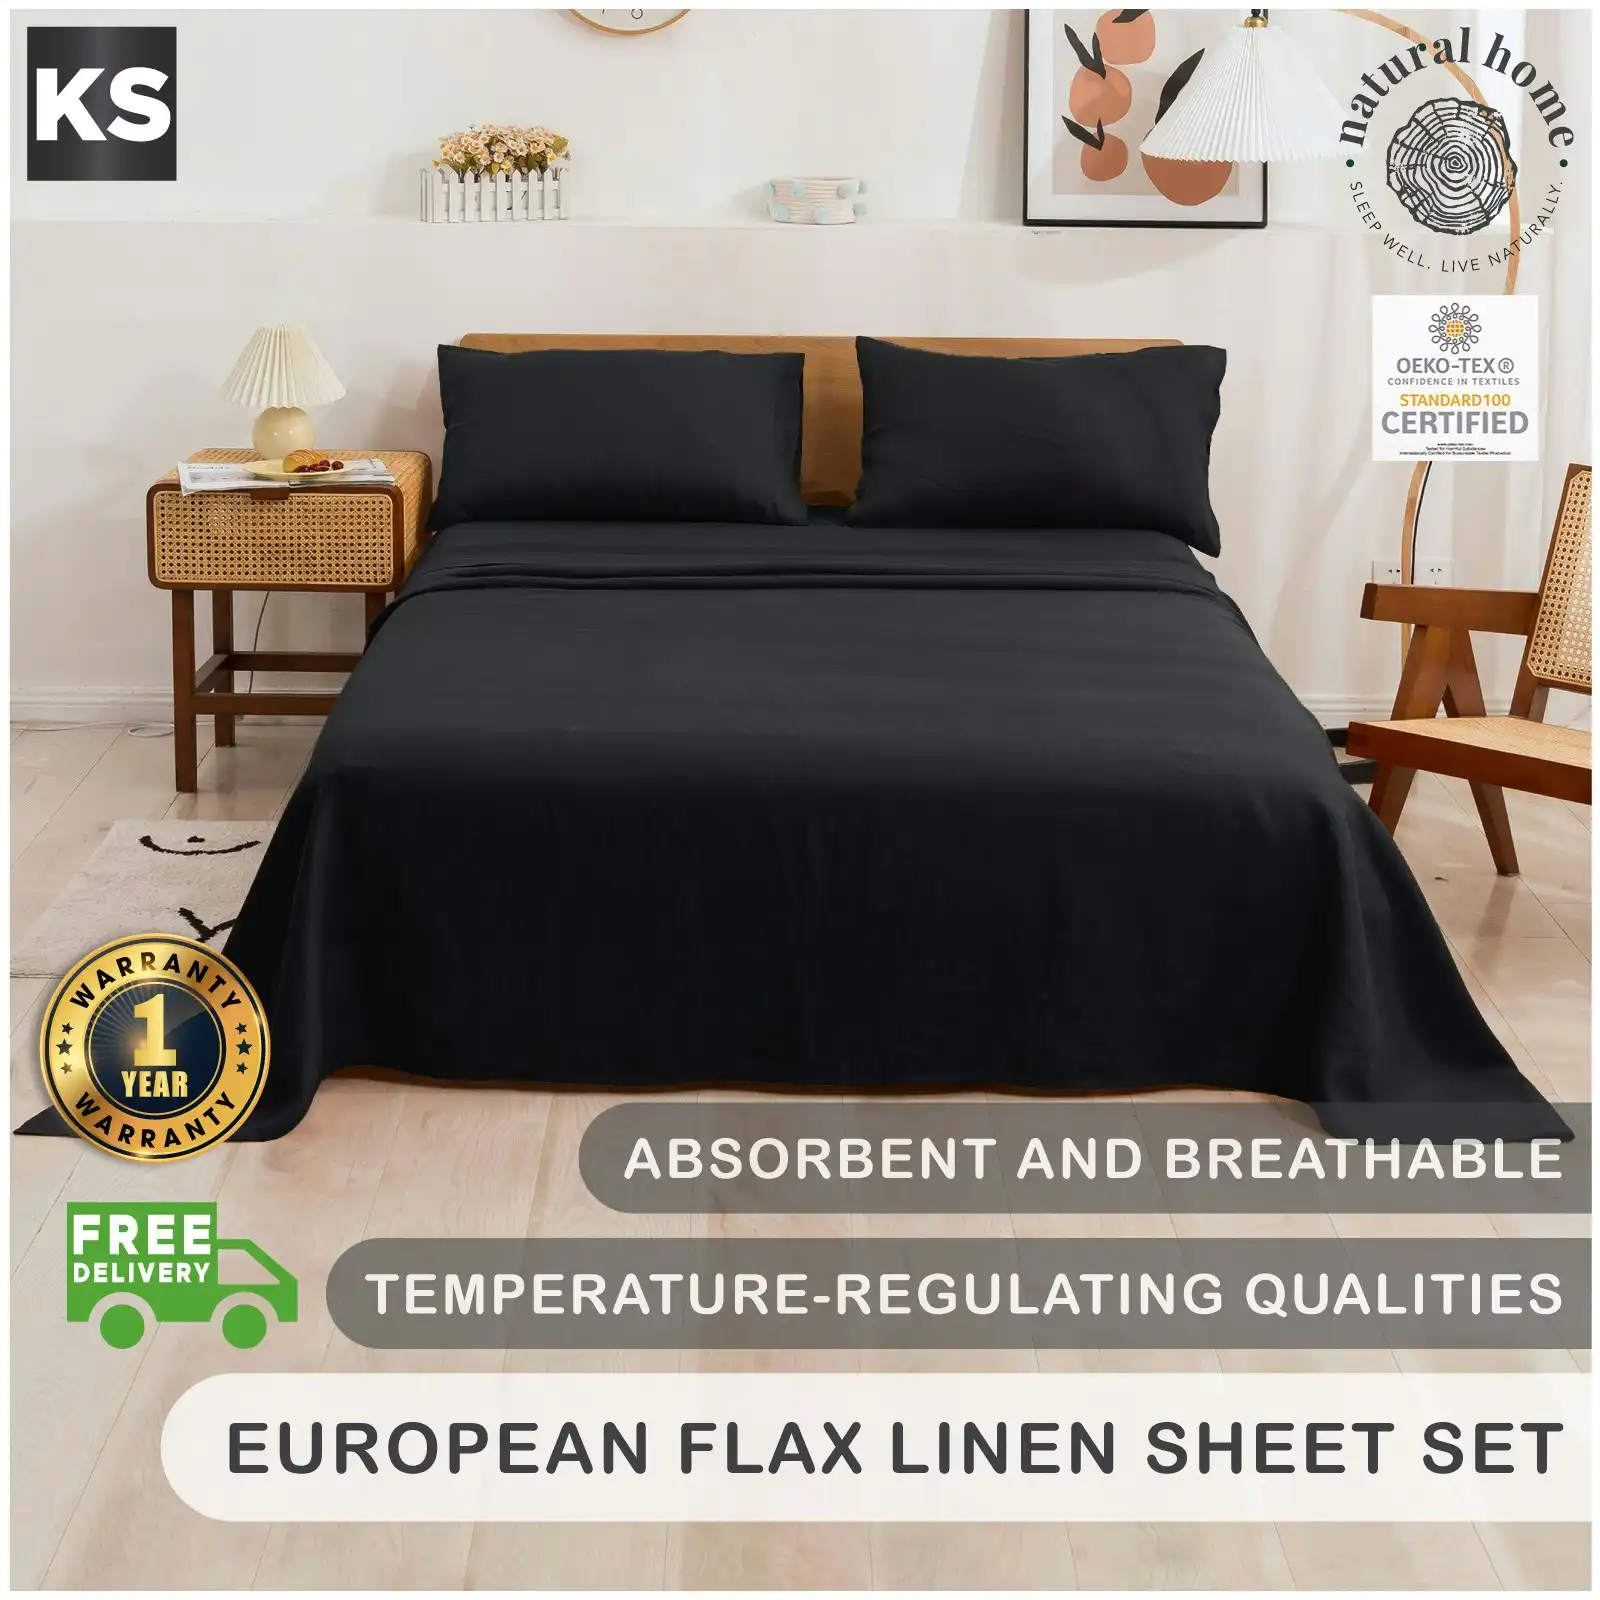 Natural Home 100% European Flax Linen Sheet Set Charcoal King Single Bed